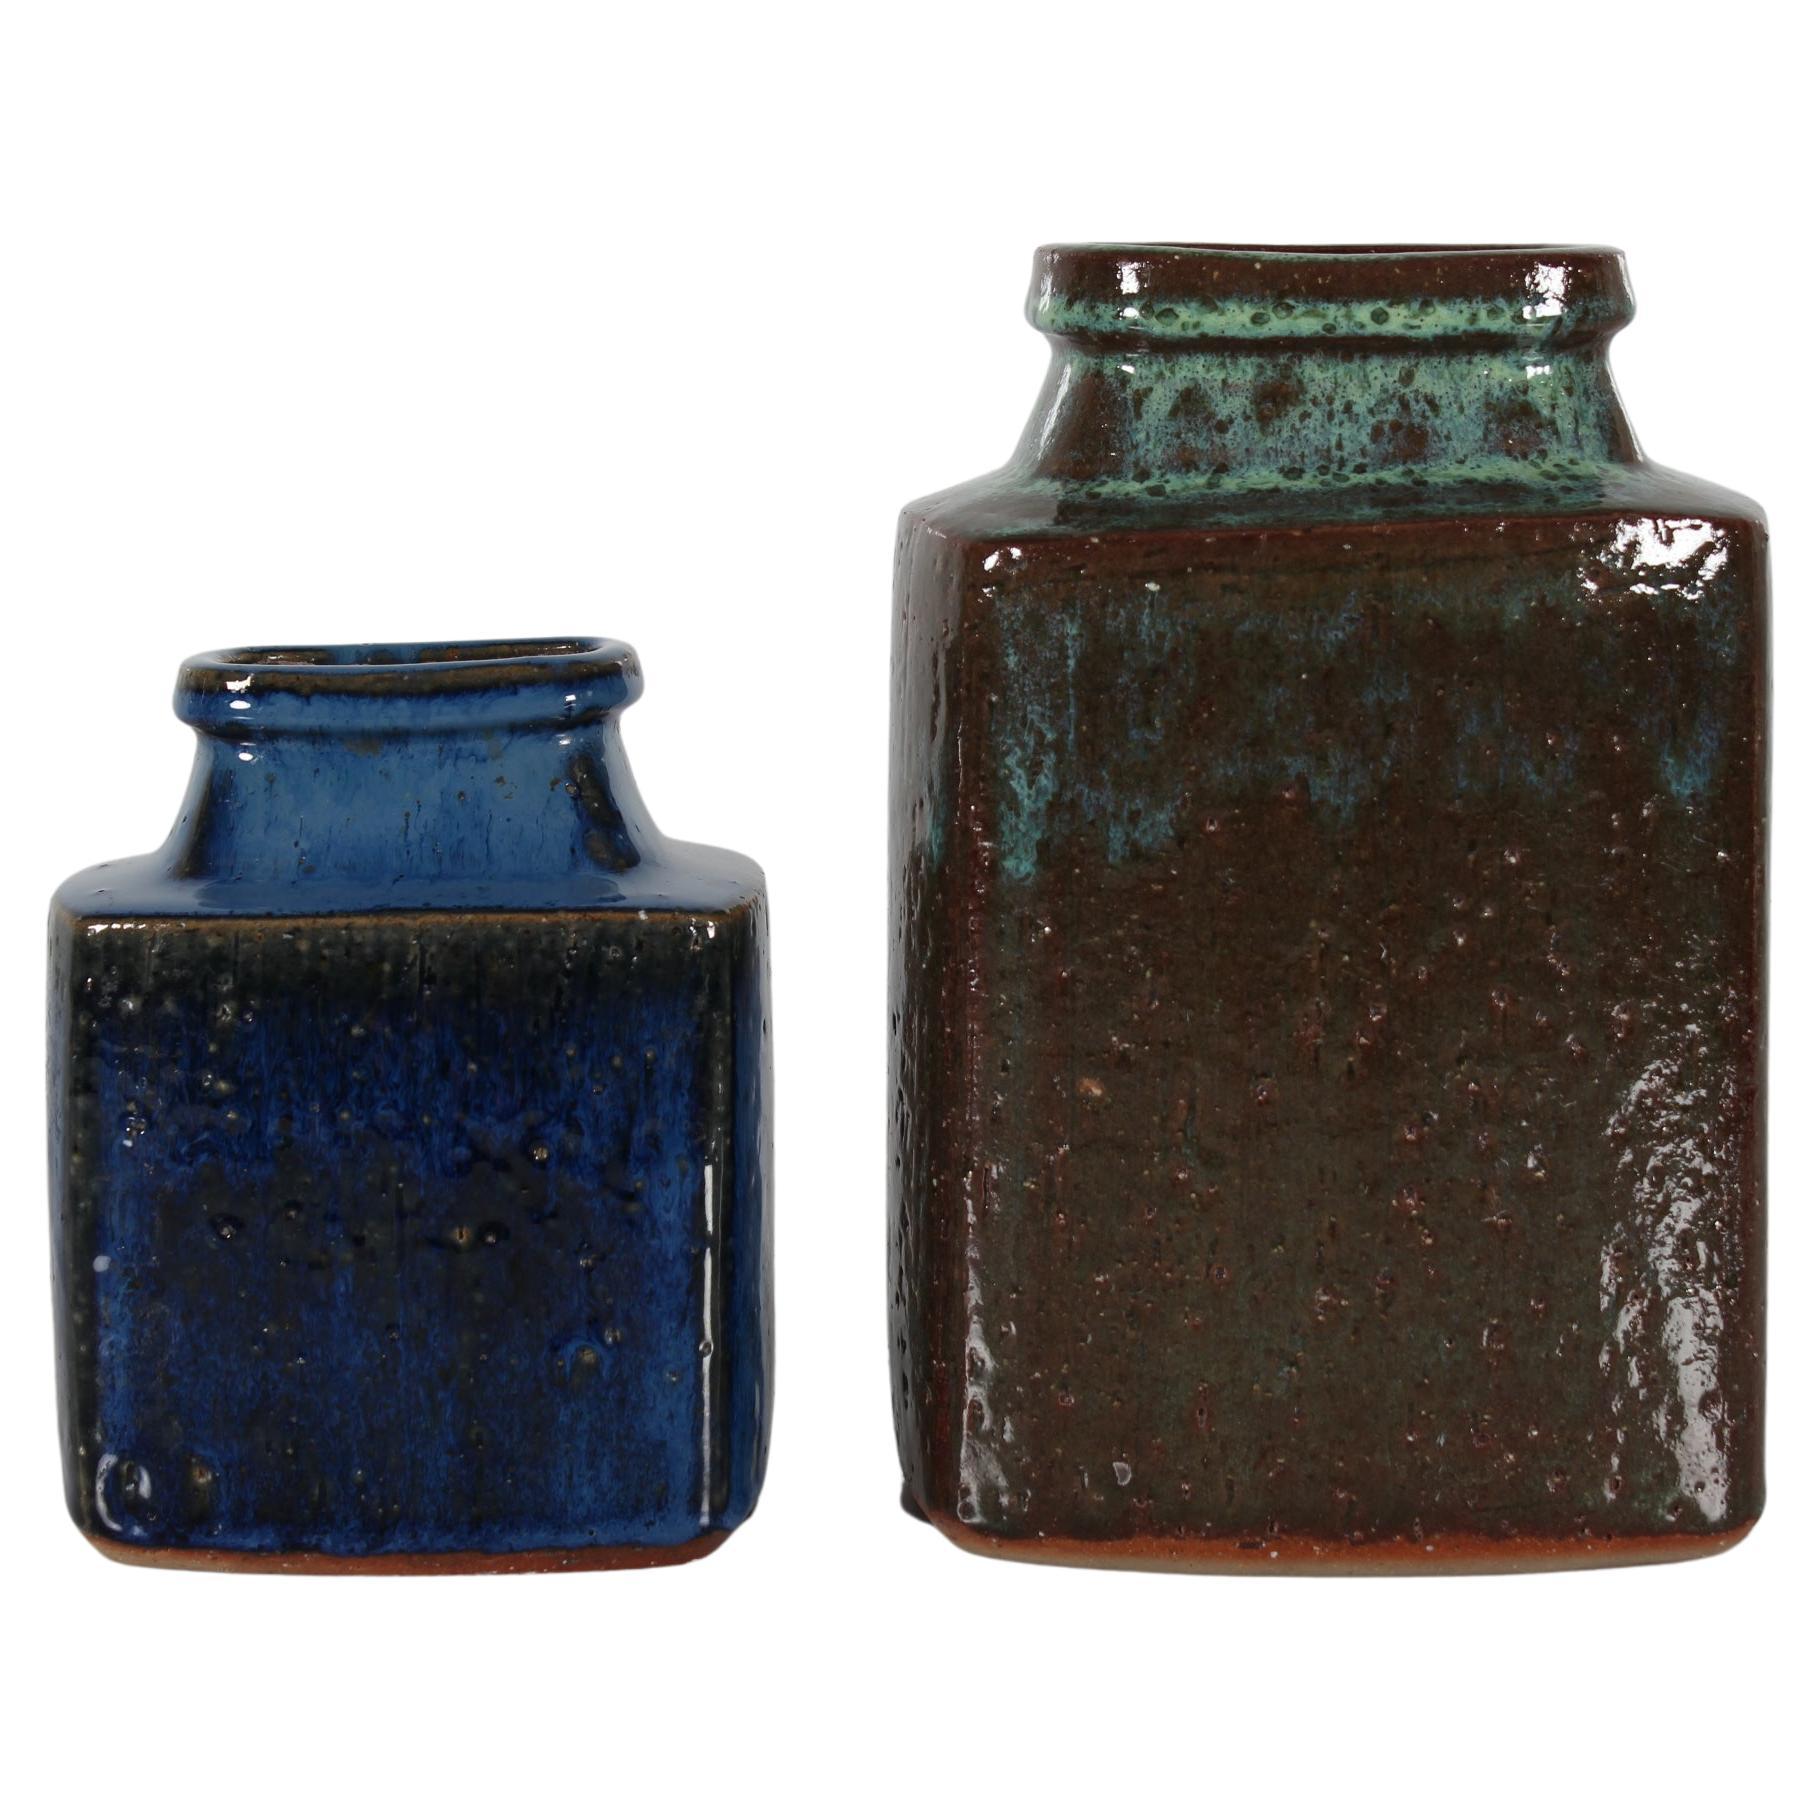 Danish Brutalist Pair of Square Rustic Ceramic Vases by Jytte Trebbien 1970 For Sale